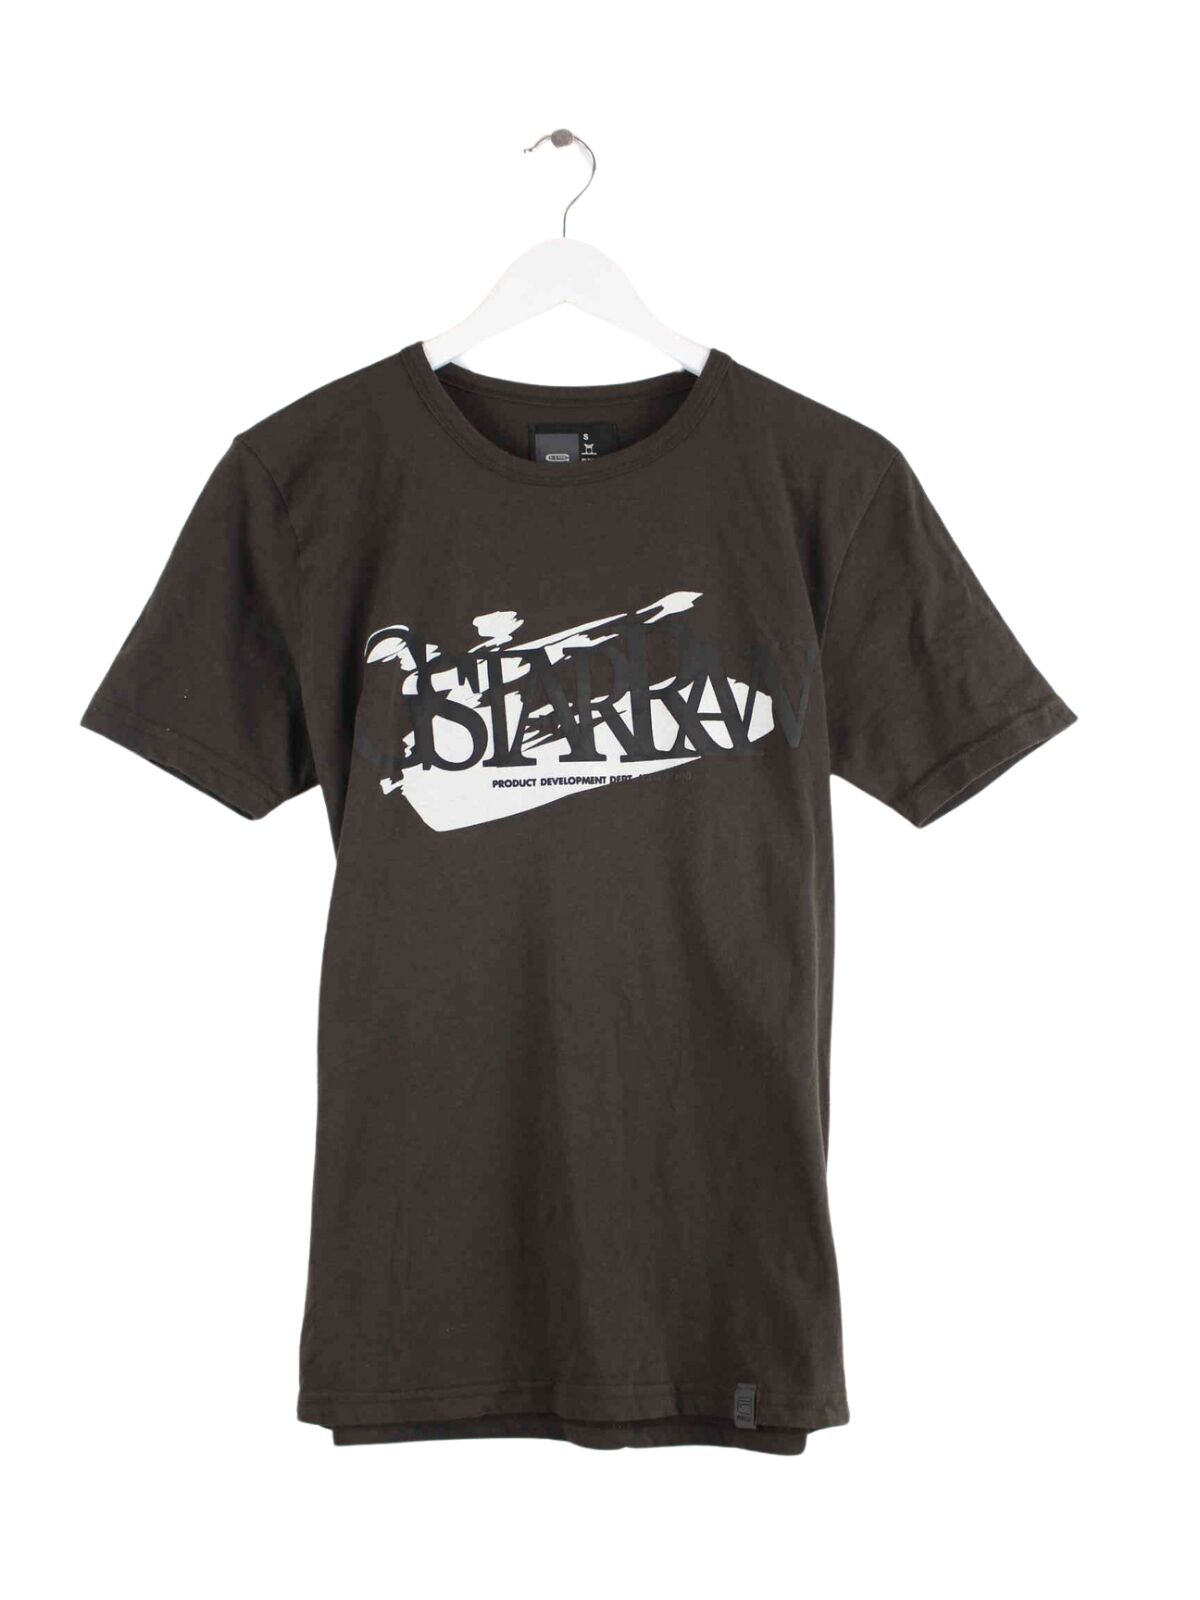 G-Star Raw Print T-Shirt Braun S (front image)